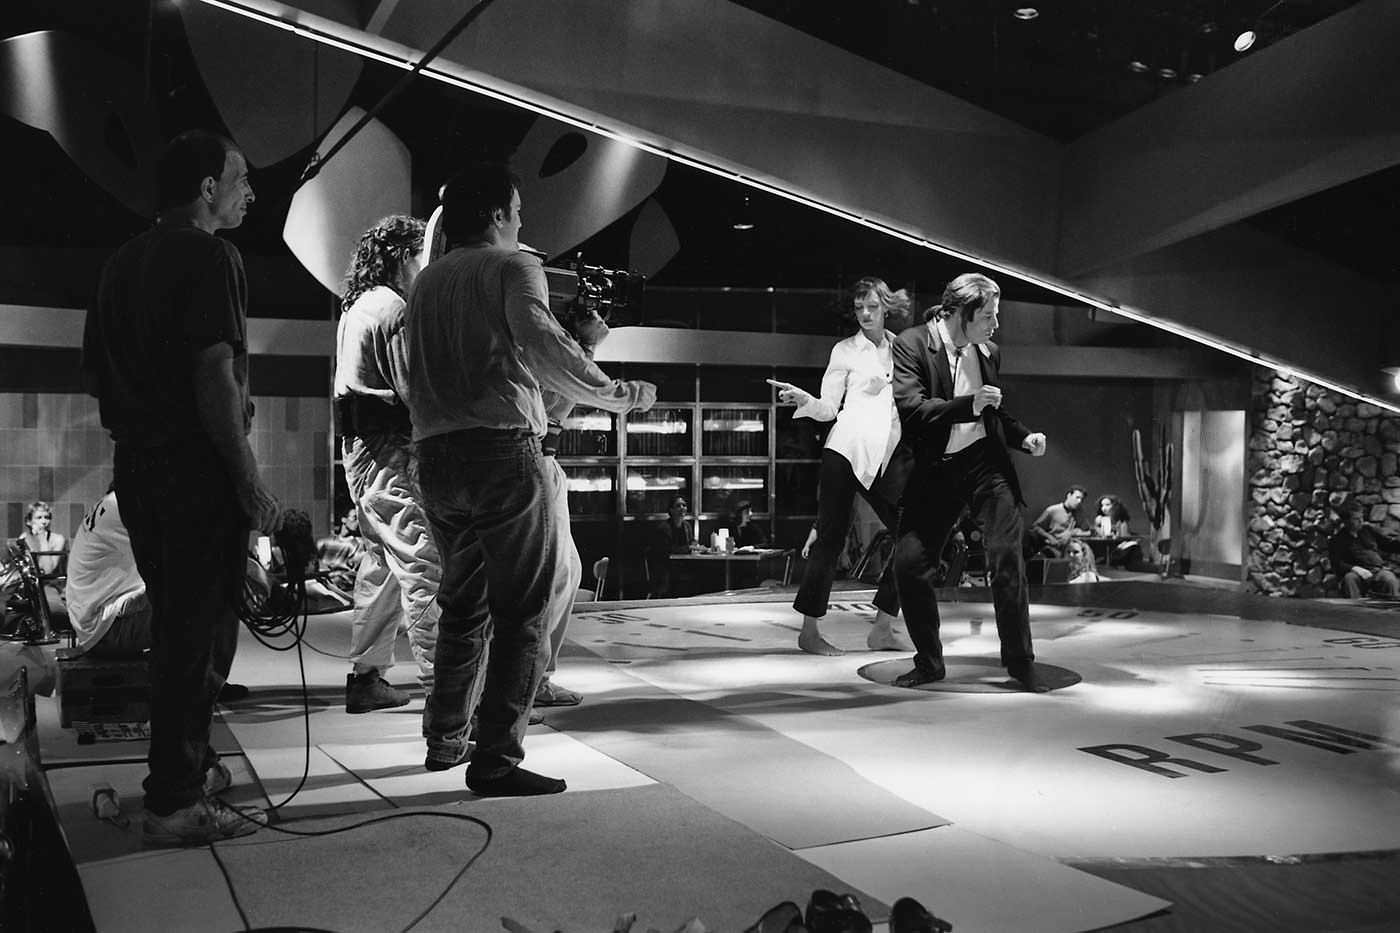 Quinten Tarantino (center) dancing along with John Travolta and Uma Thurman during a scene in Pulp Fiction in 1994.